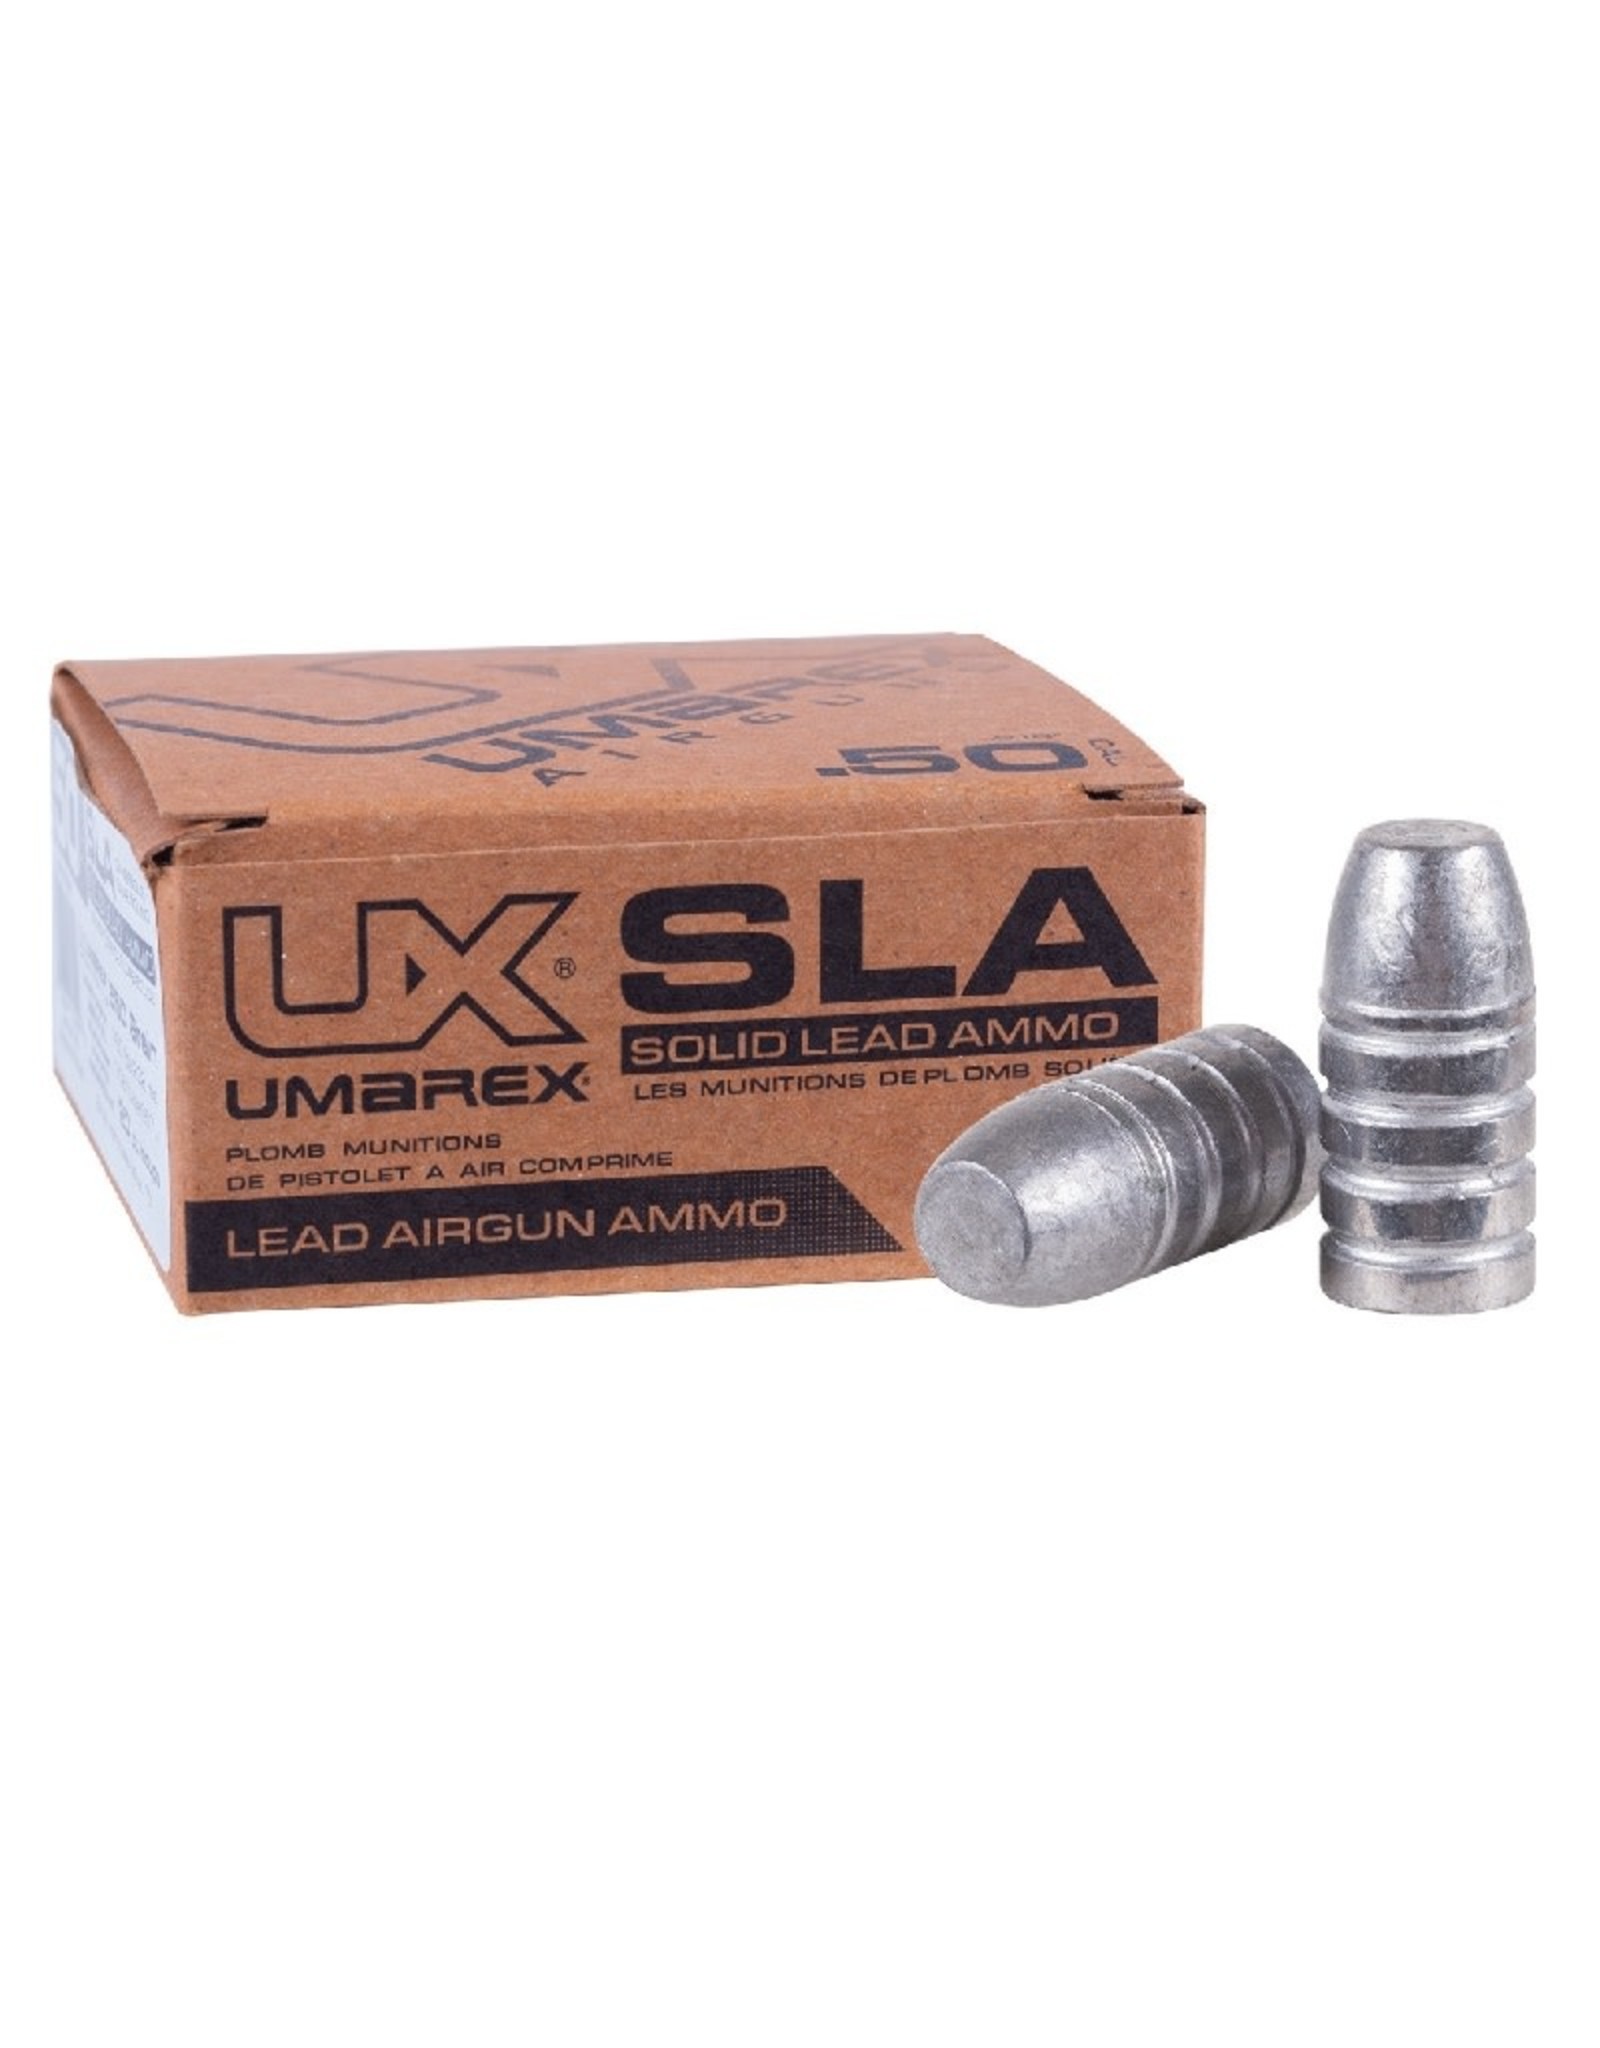 Umarex single - SLA - Solid Lead Ammo - .510/.50 cal, 550 grain (20ct.) by Umarex